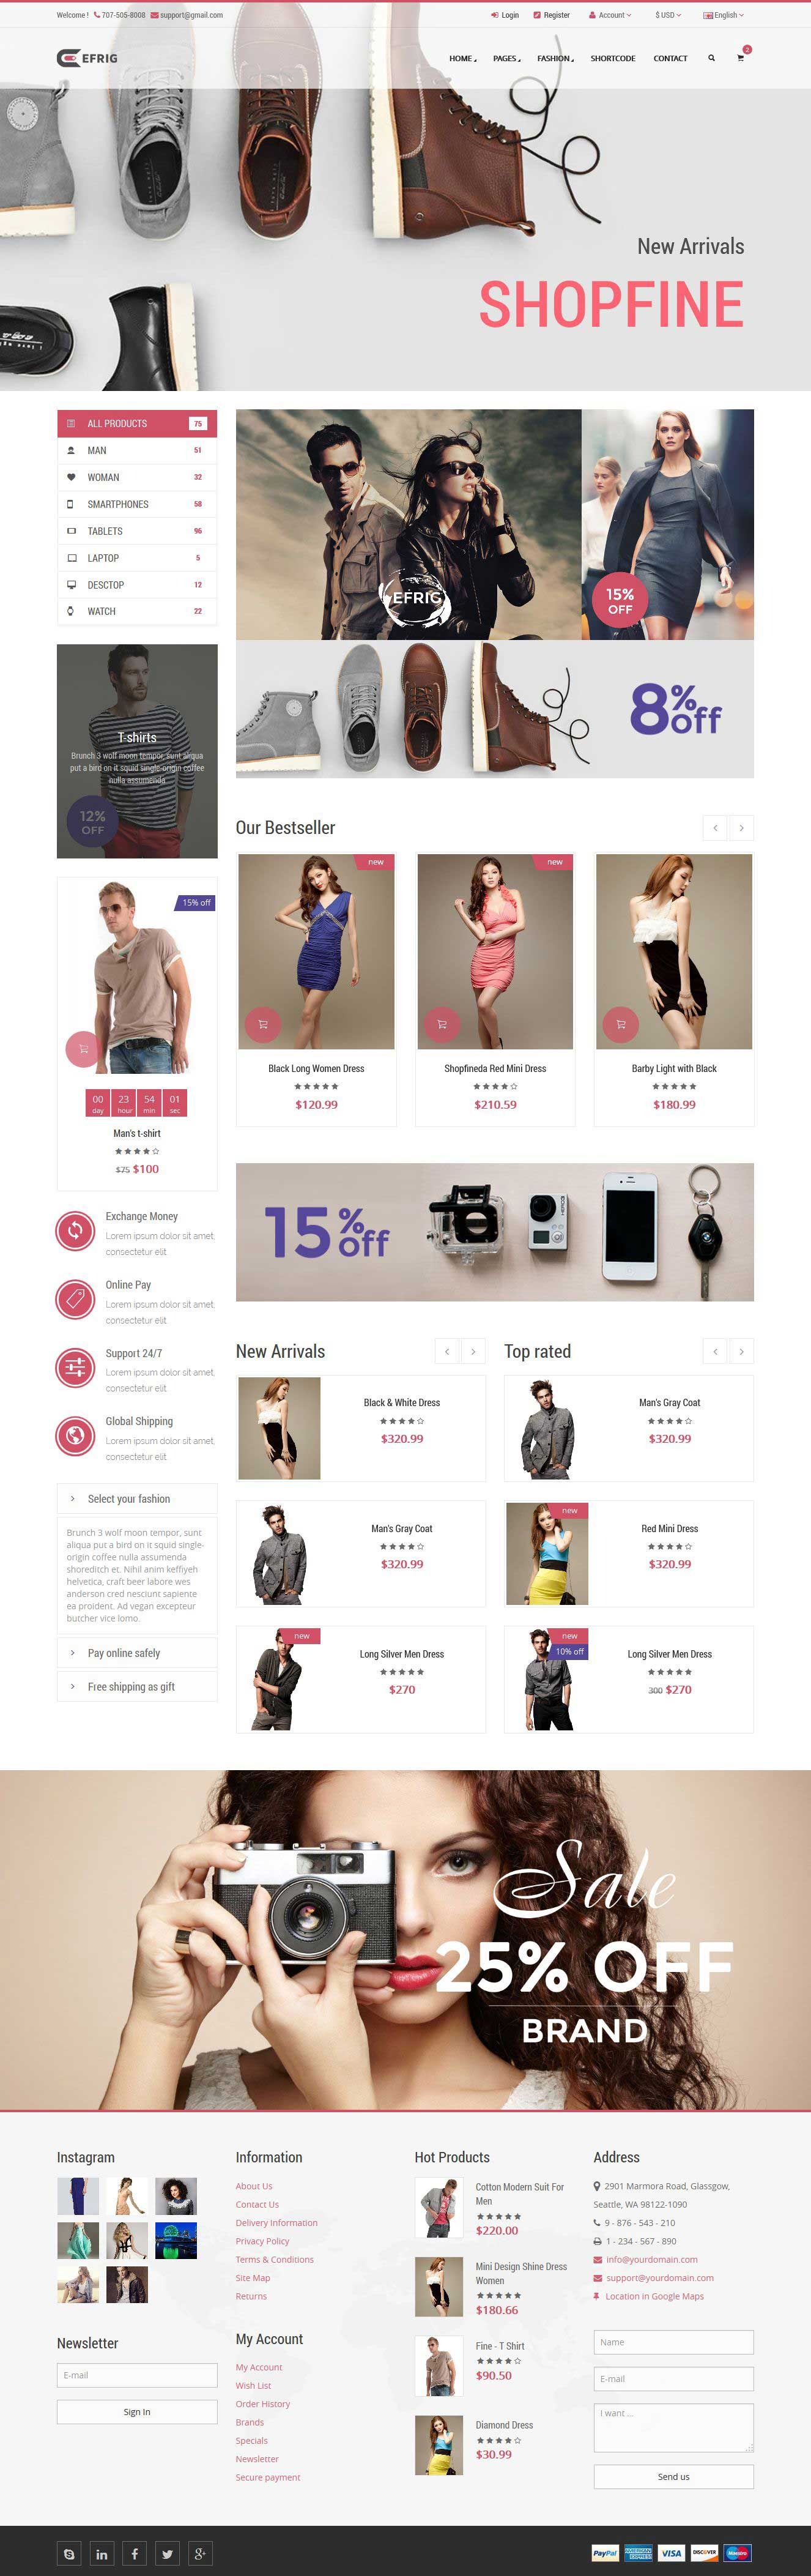 Shopfine - Responsive E-Commerce Template